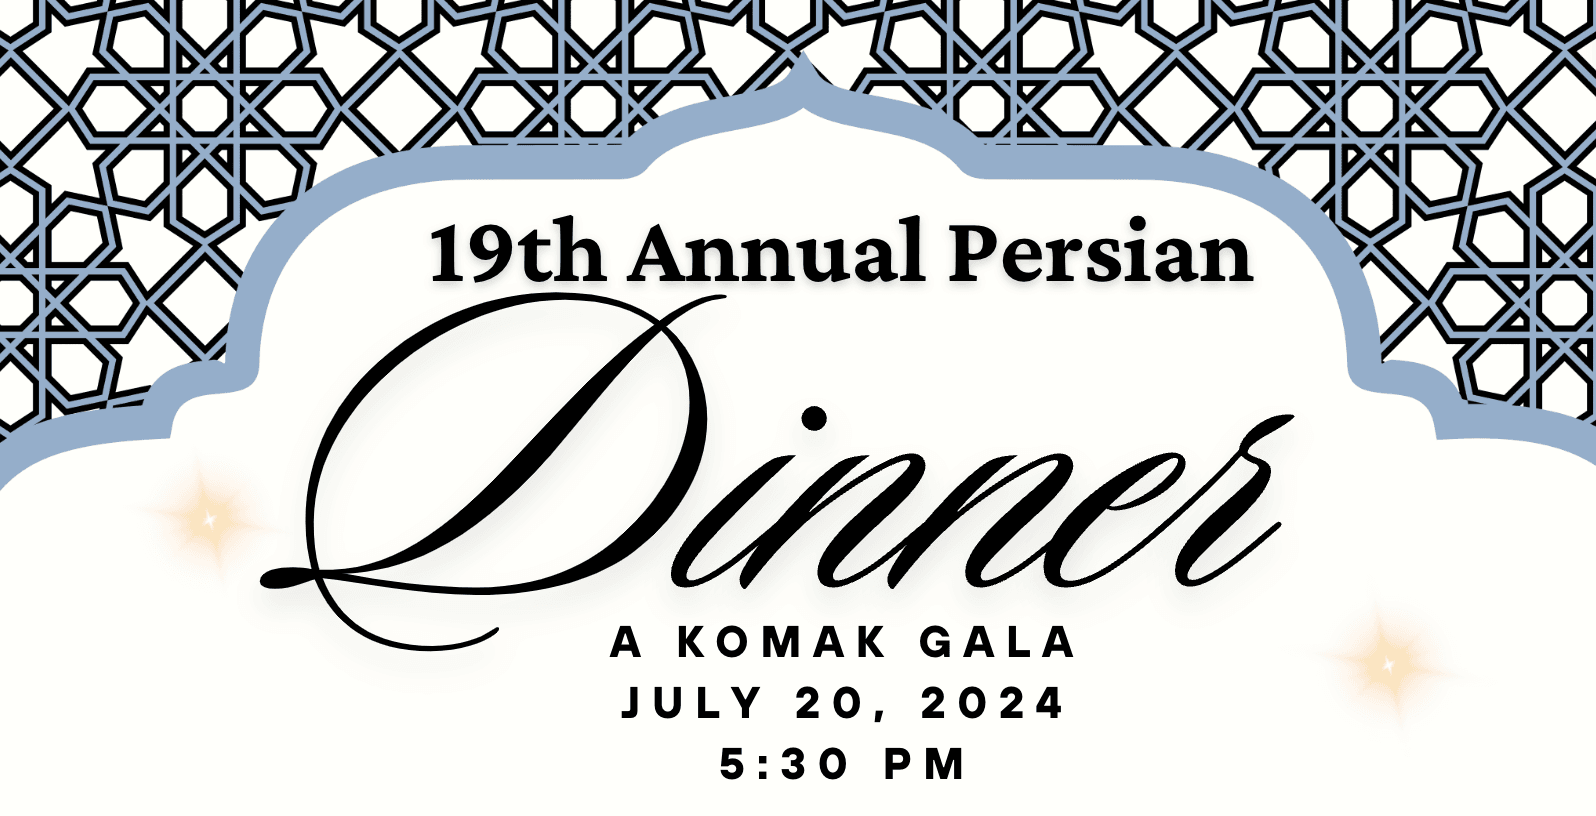 19th Annual Persian Dinner